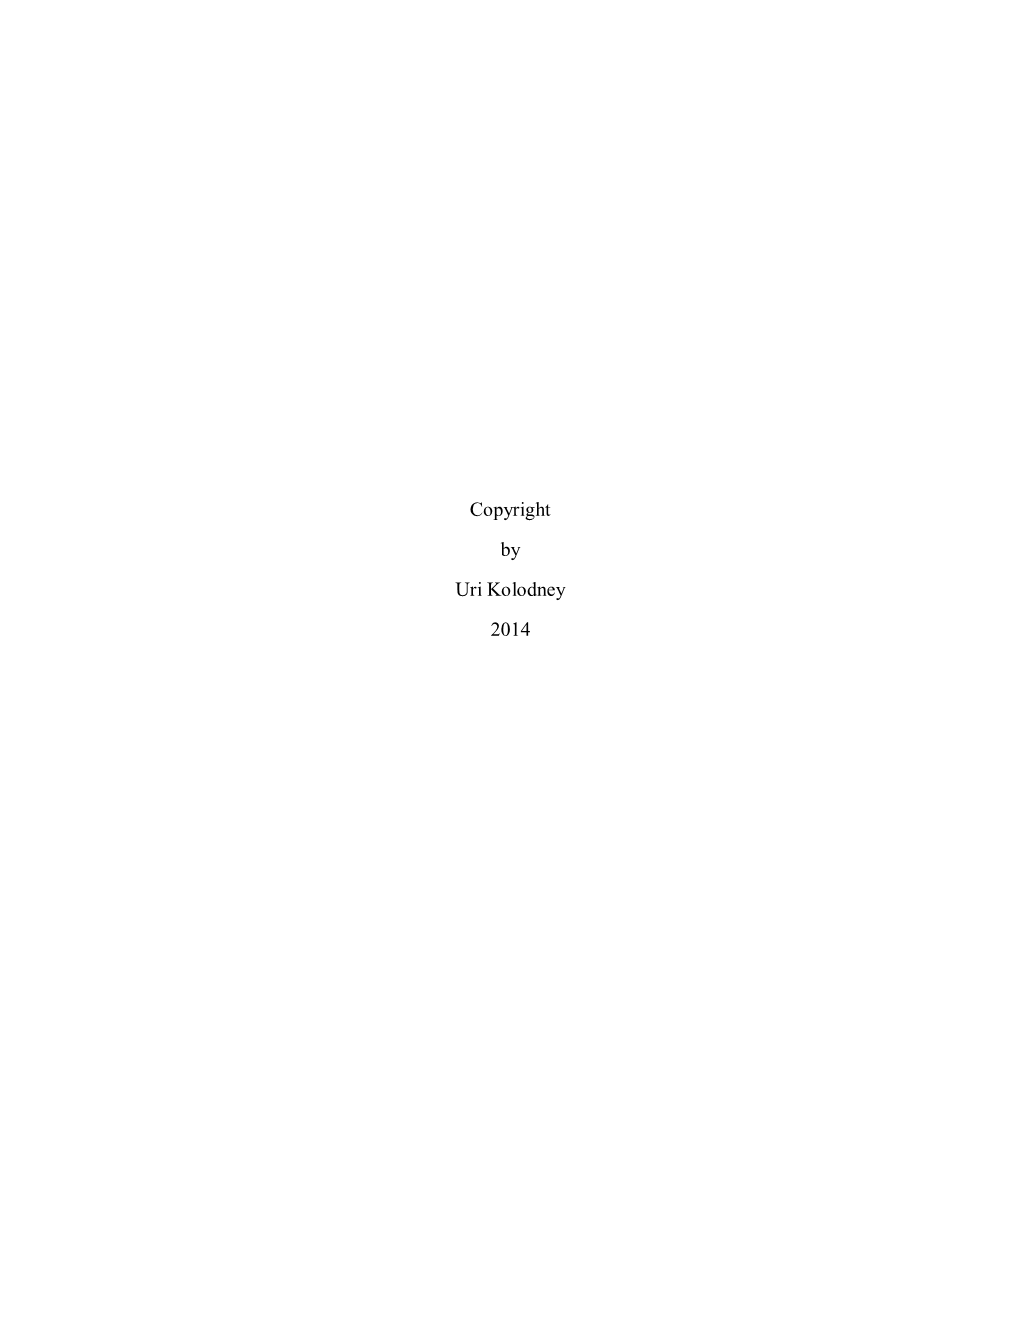 KOLODNEY-THESIS-2014.Pdf (721.3Kb)